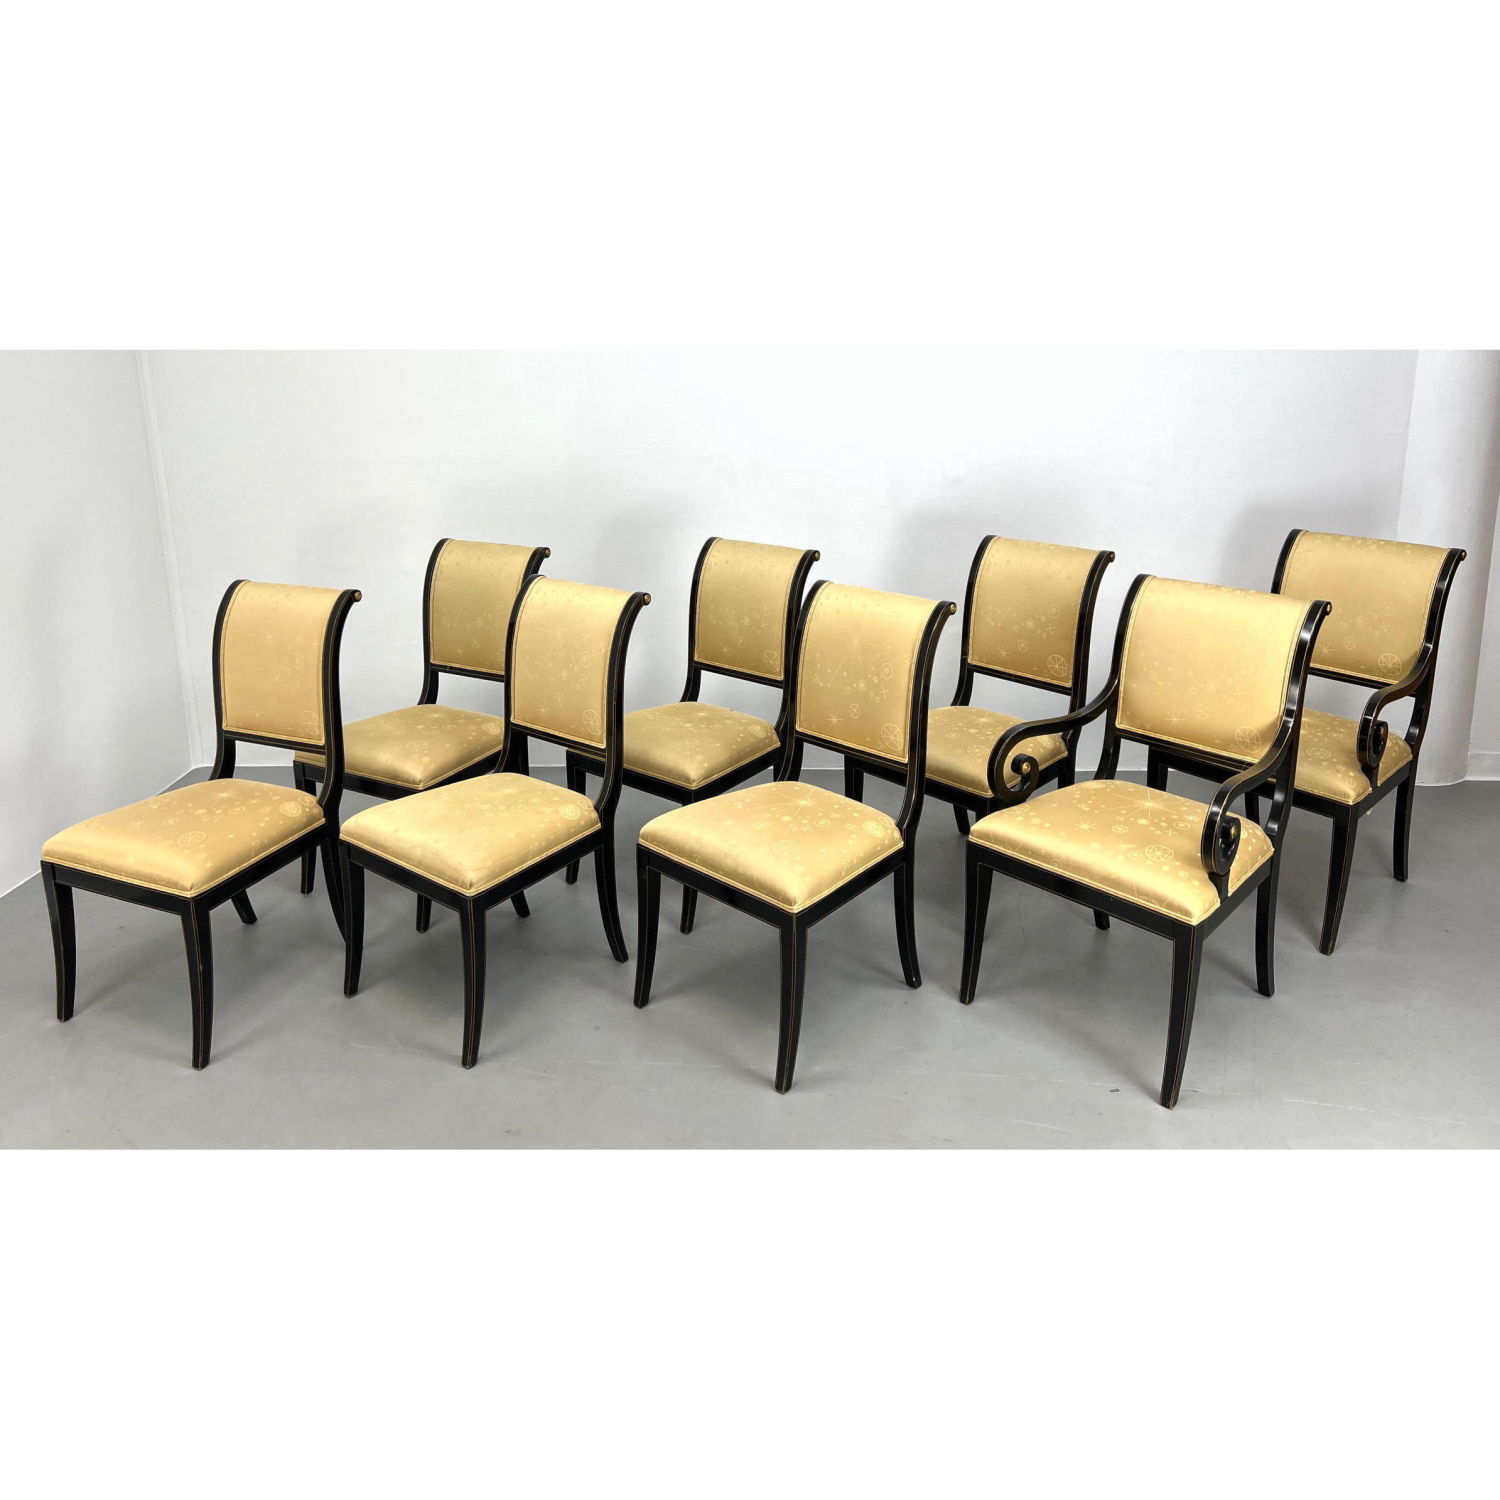 Set 8 KINDEL Dining Chairs. Black